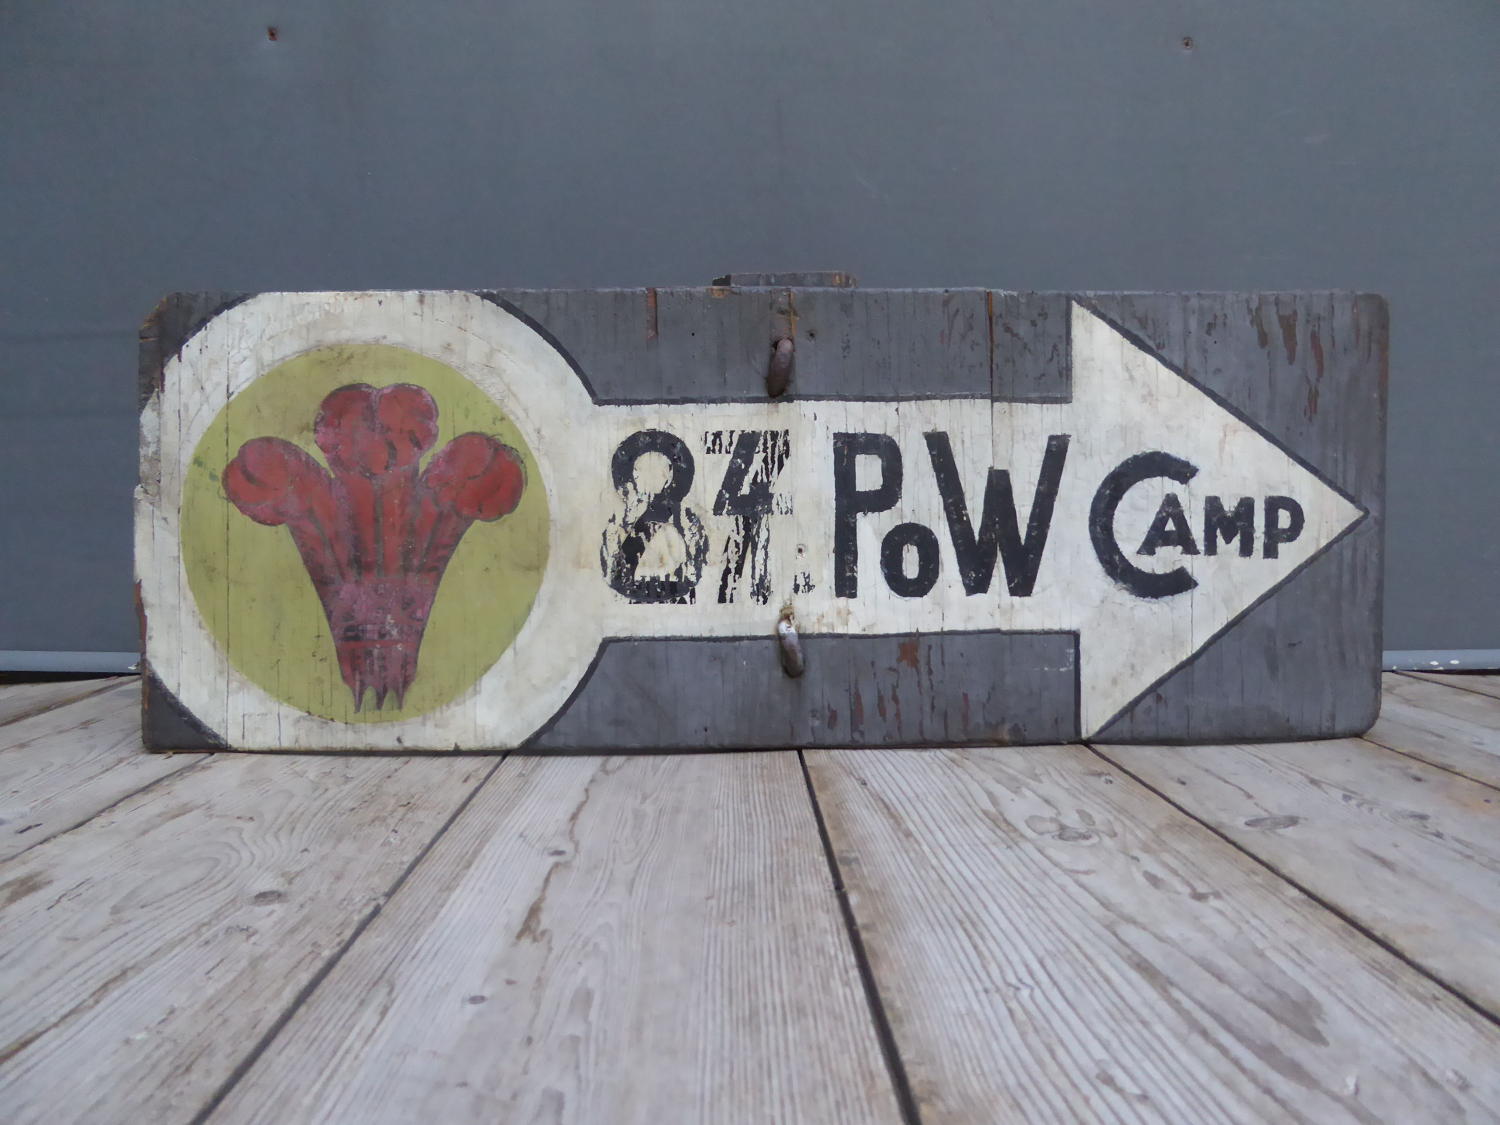 POW Camp